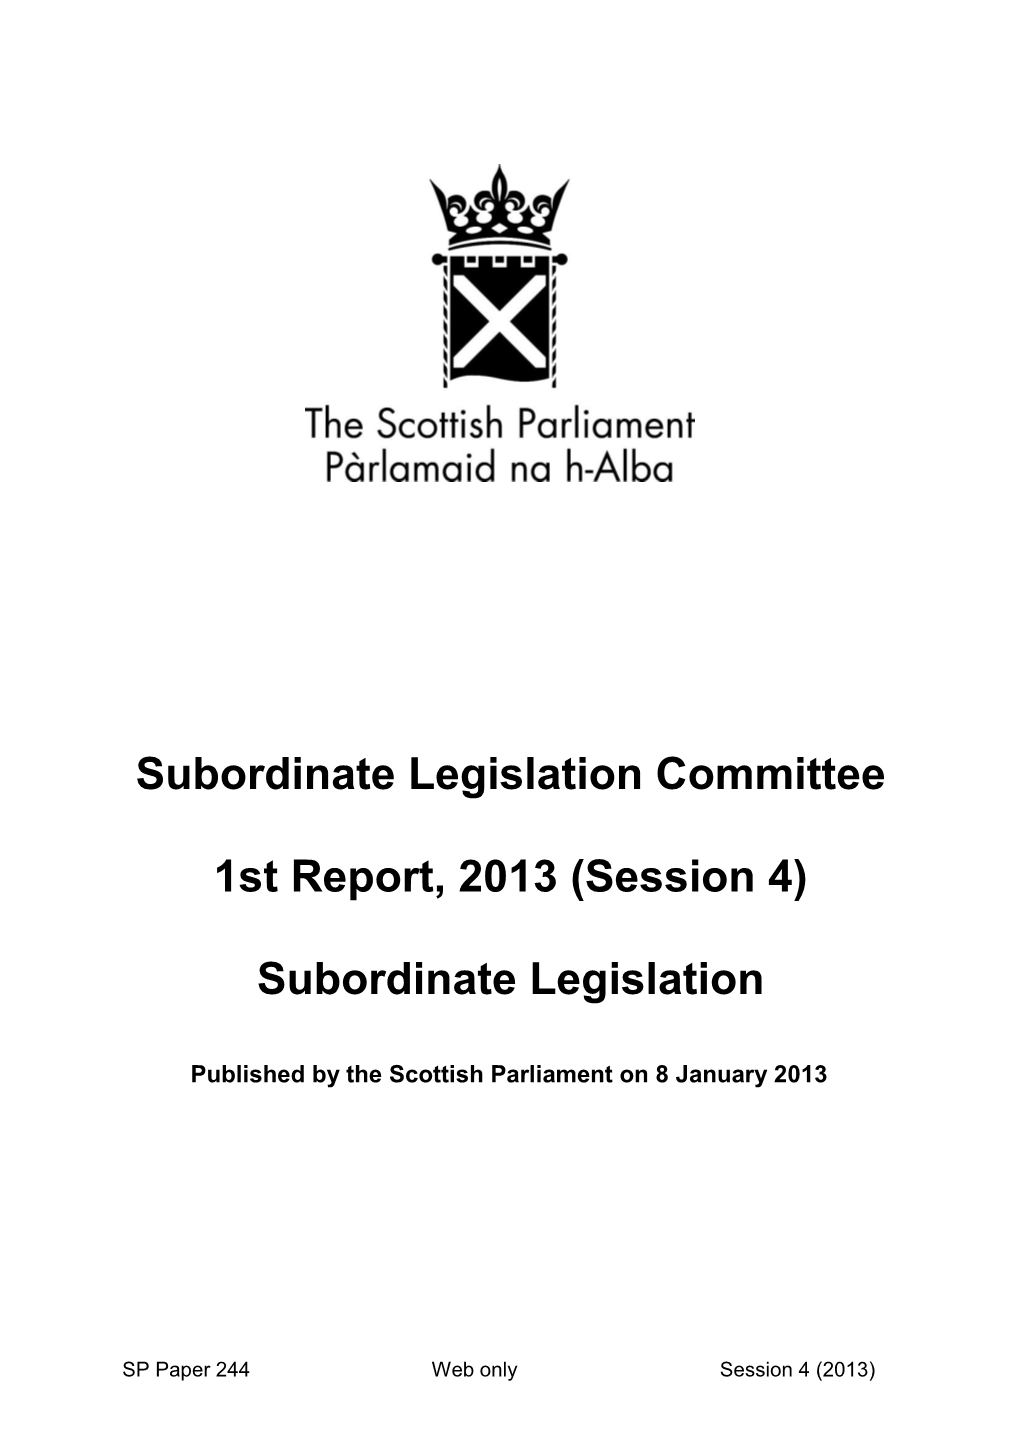 Subordinate Legislation Committee 1St Report